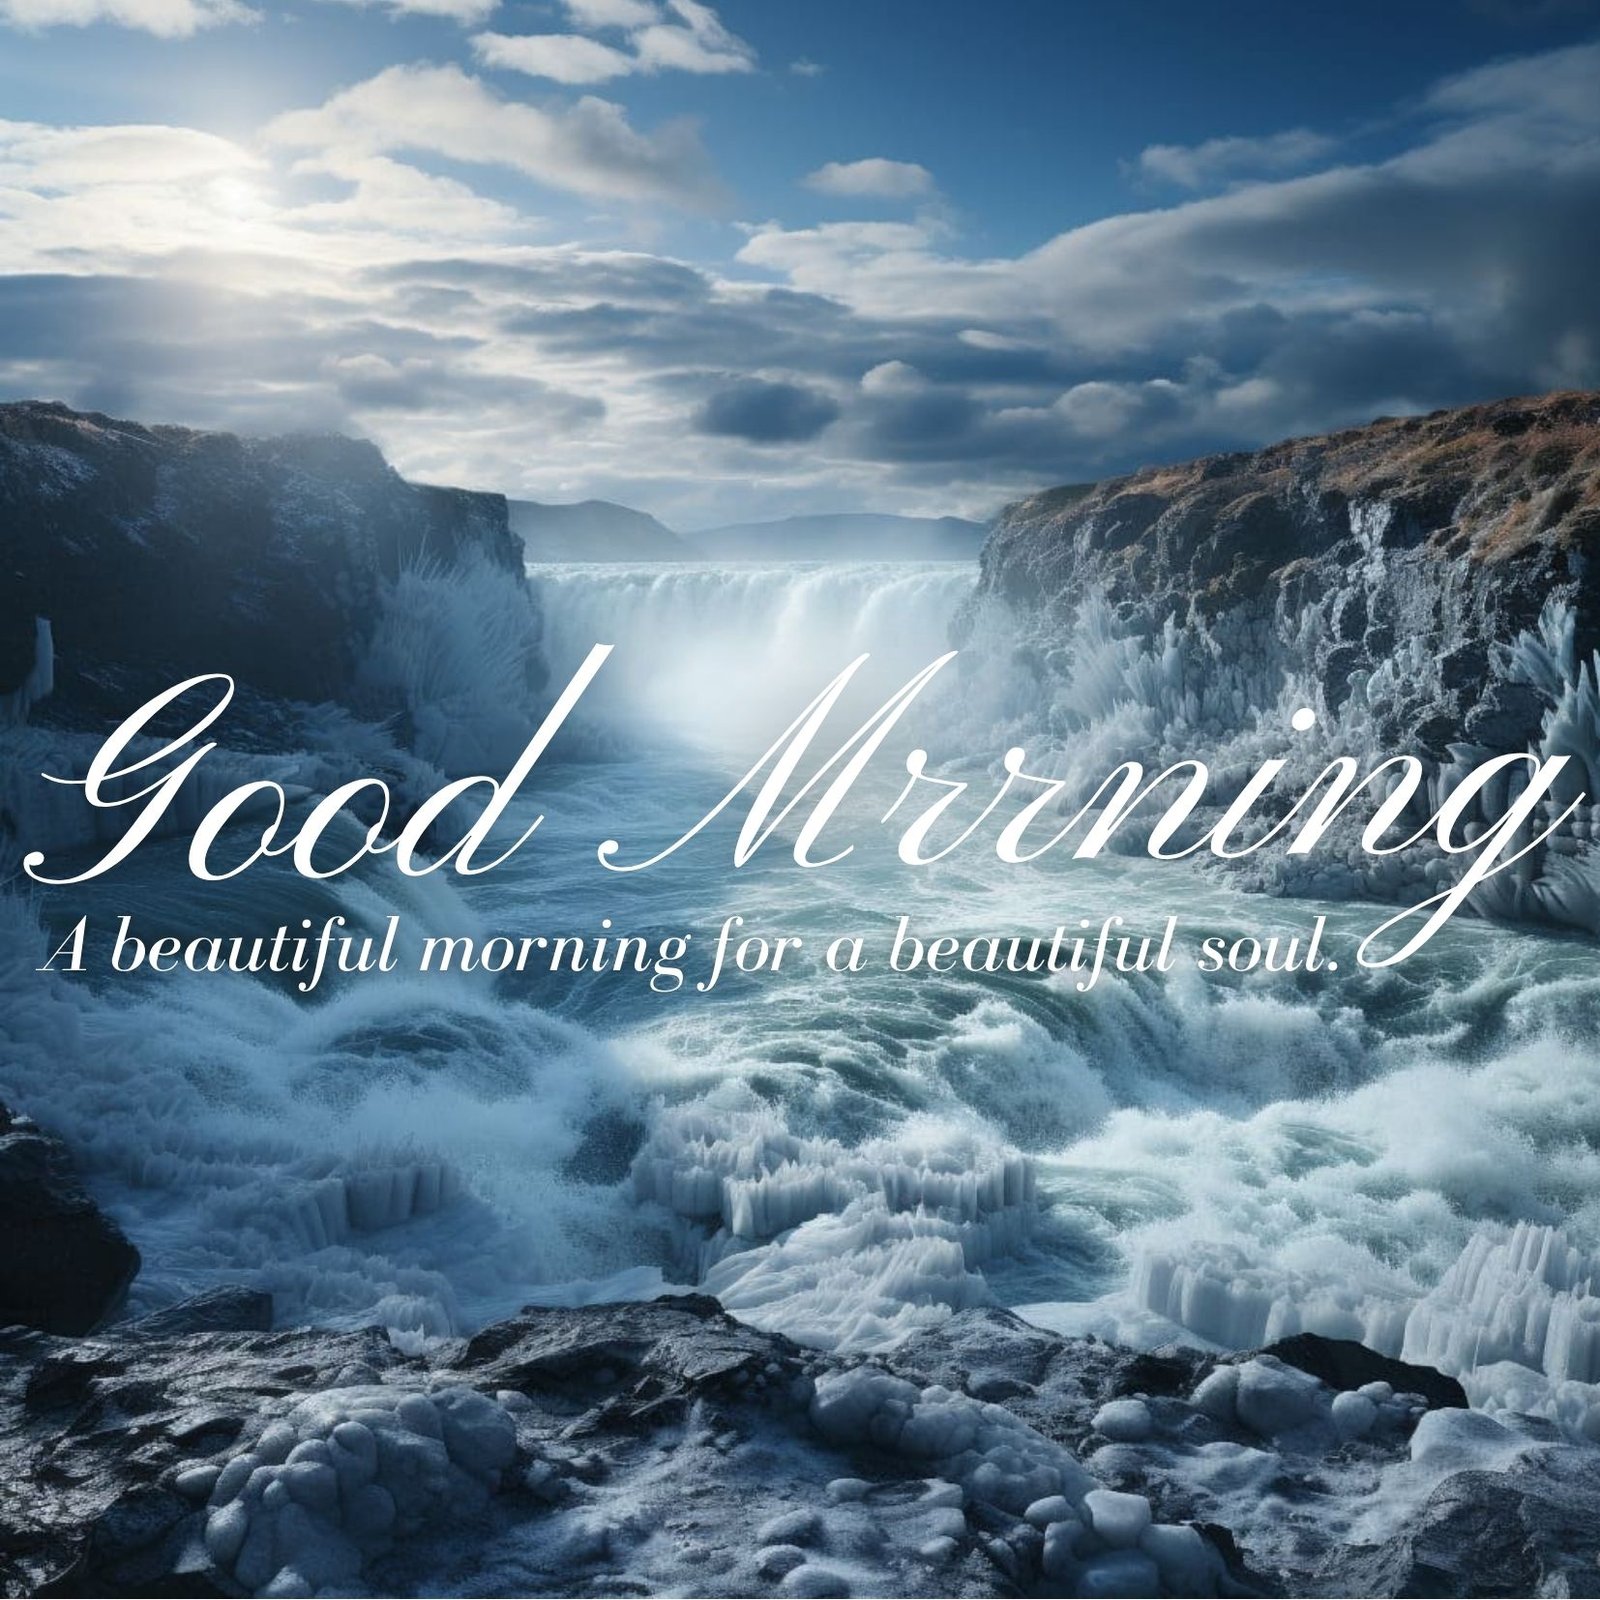 Outstanding Good Morning Waterfall Image